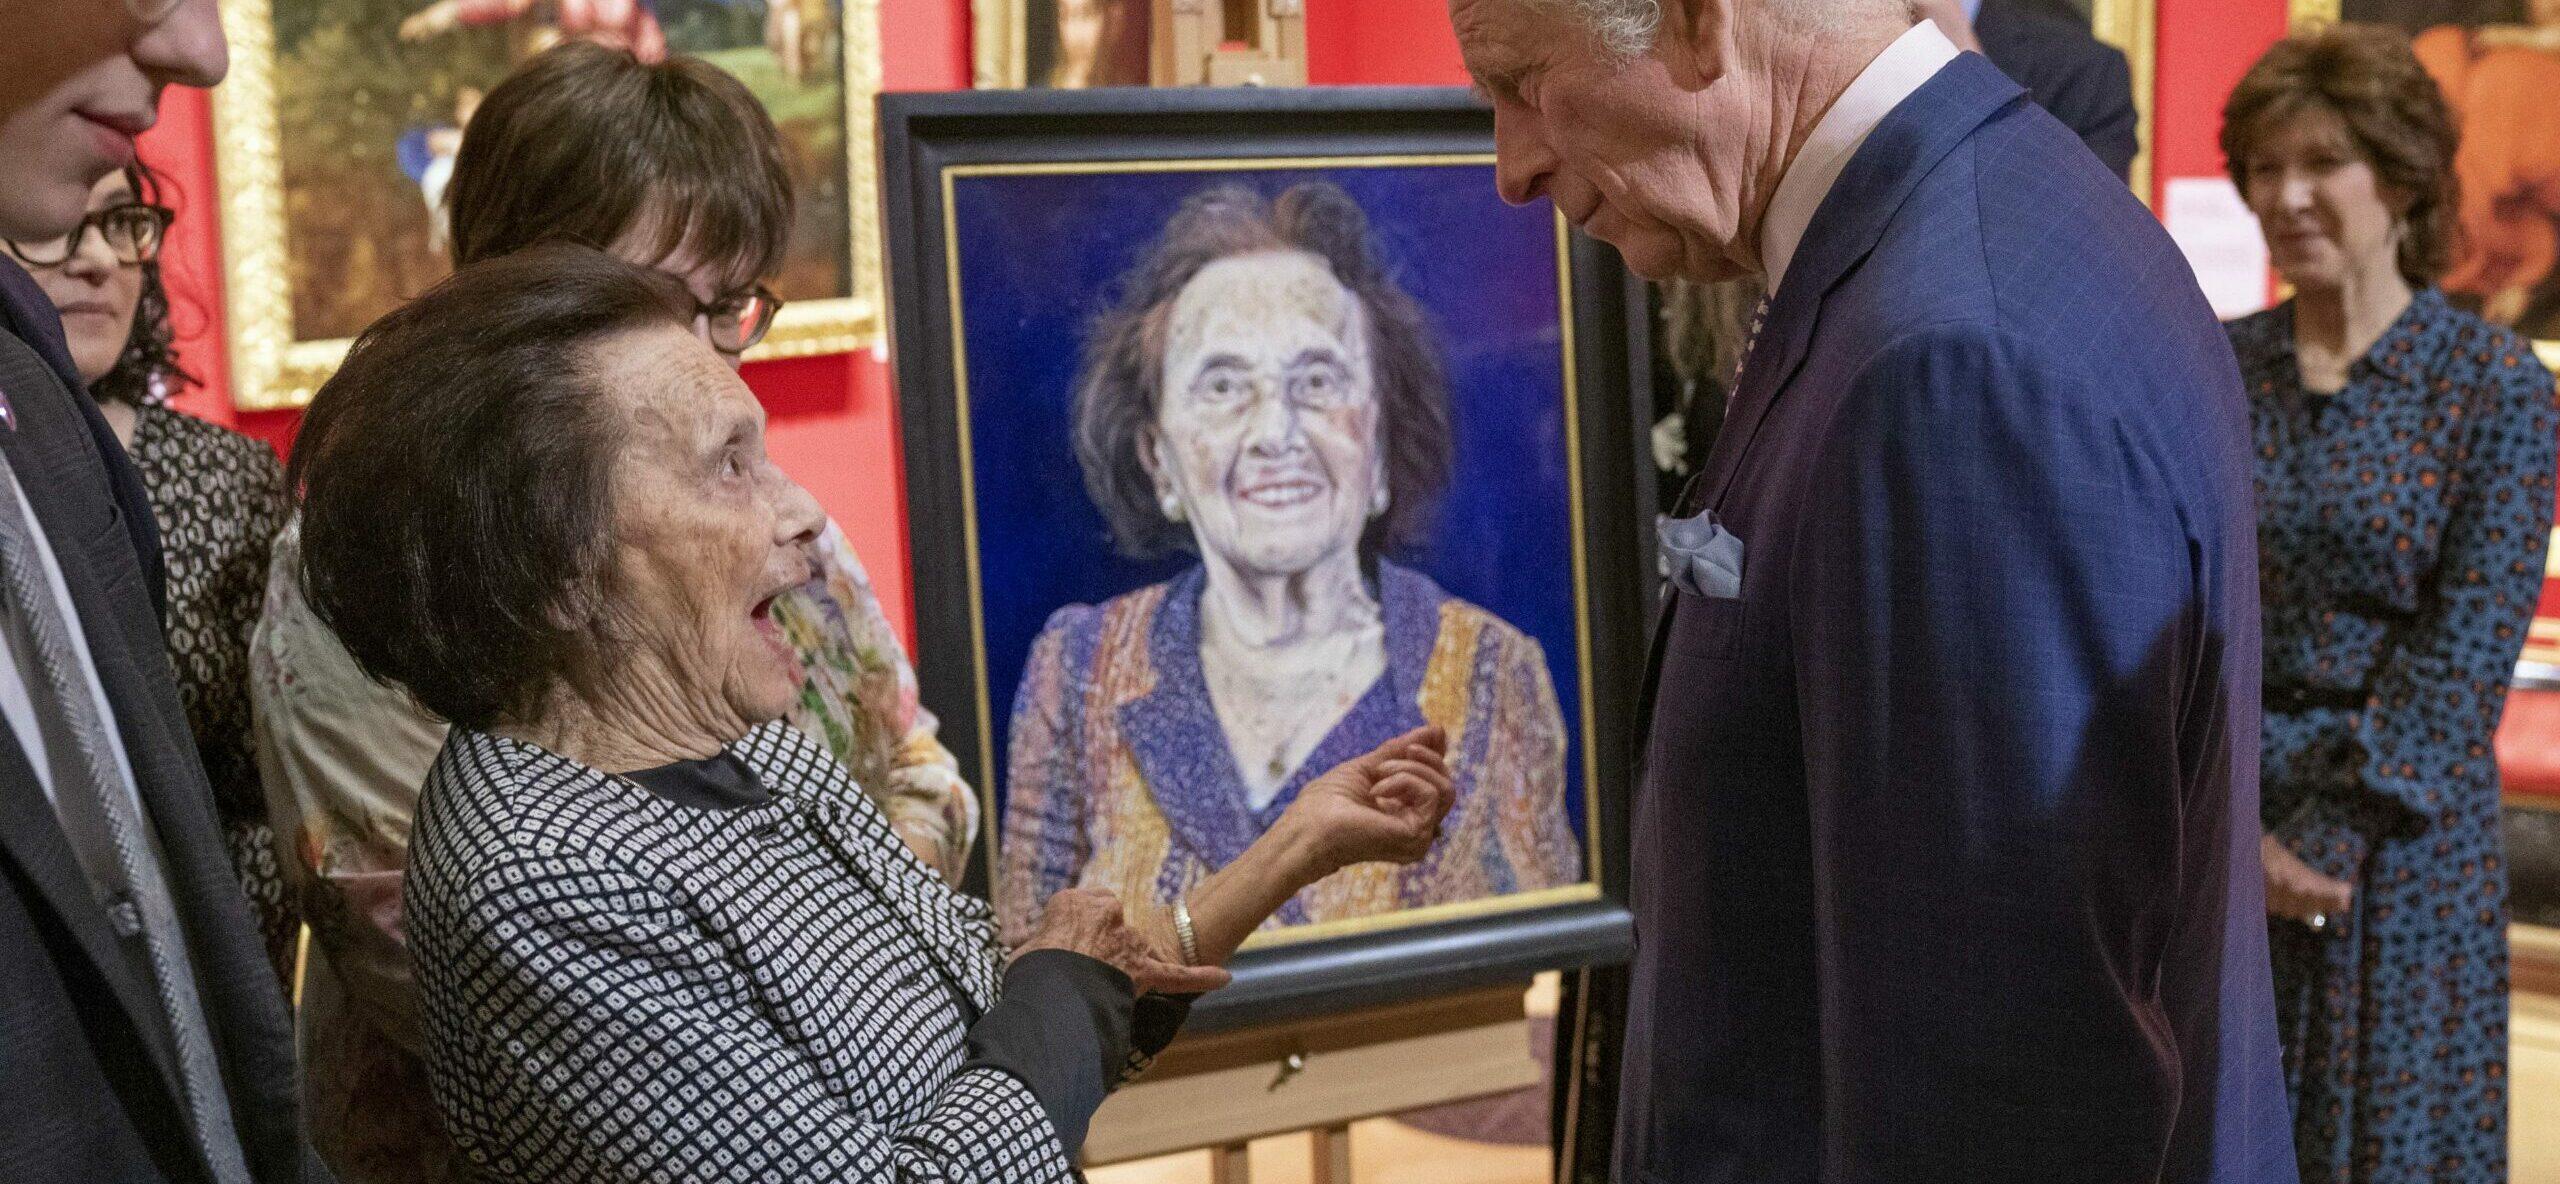 98-Year-Old Holocaust Survivor Lily Ebert Shares Her Story Through TikTok